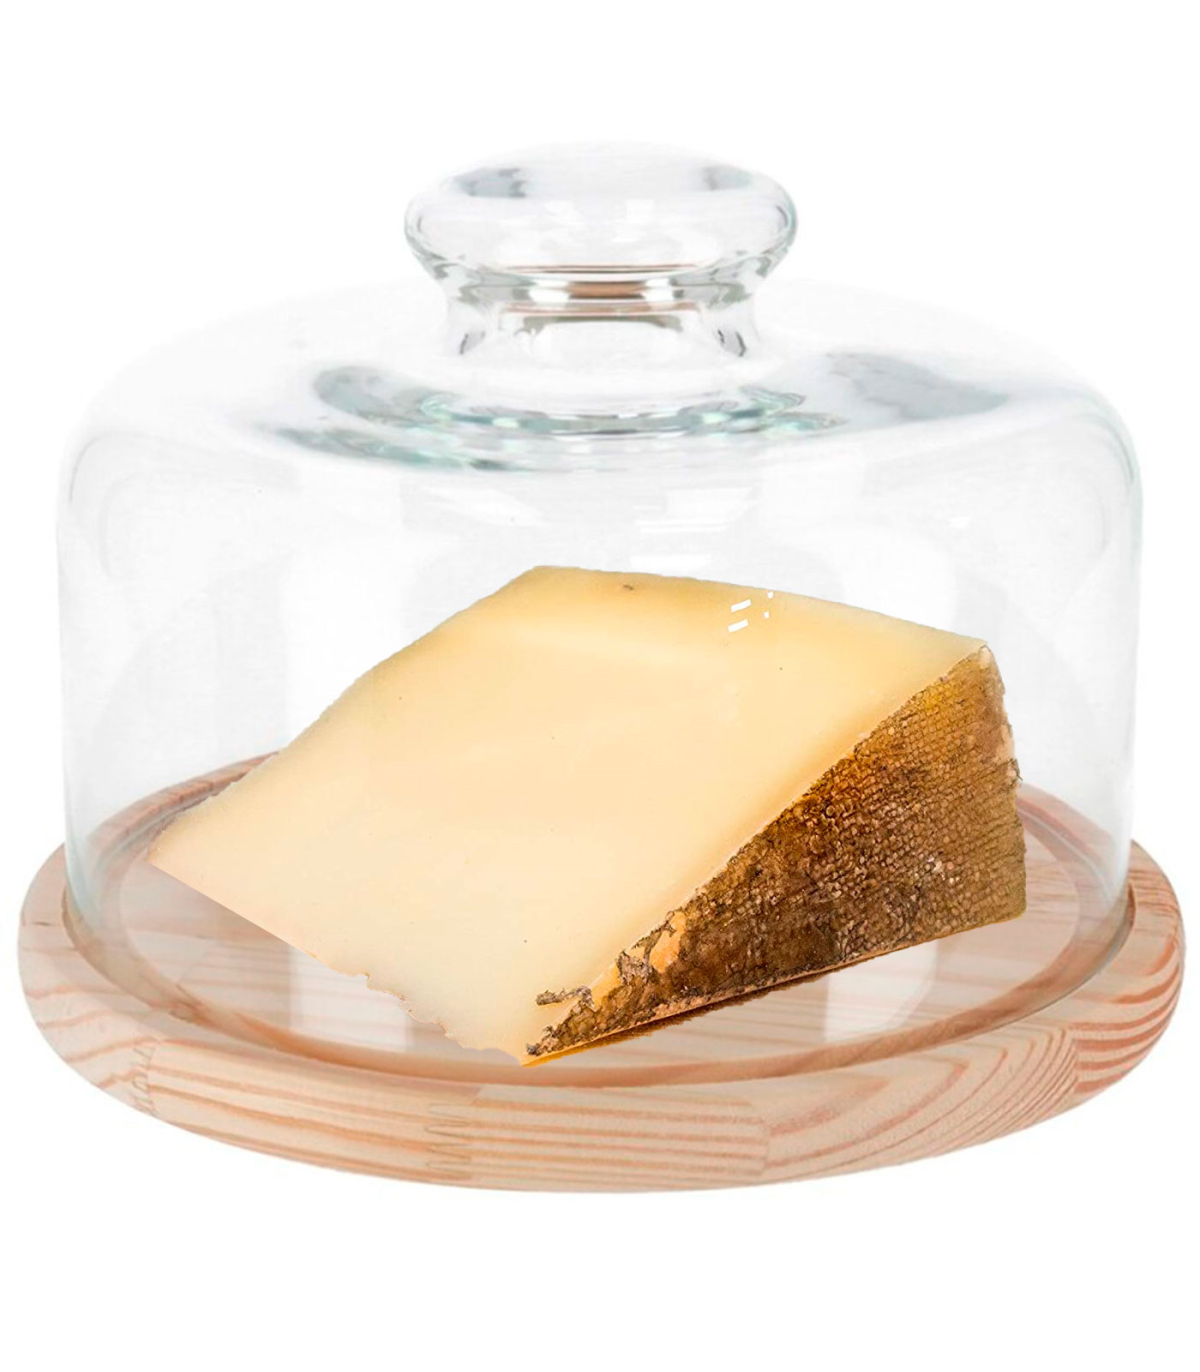 Artema - Quesera redonda, tapa transparente de metacrilato y base de  madera, recipiente para guardar queso o embutidos, 22 cm